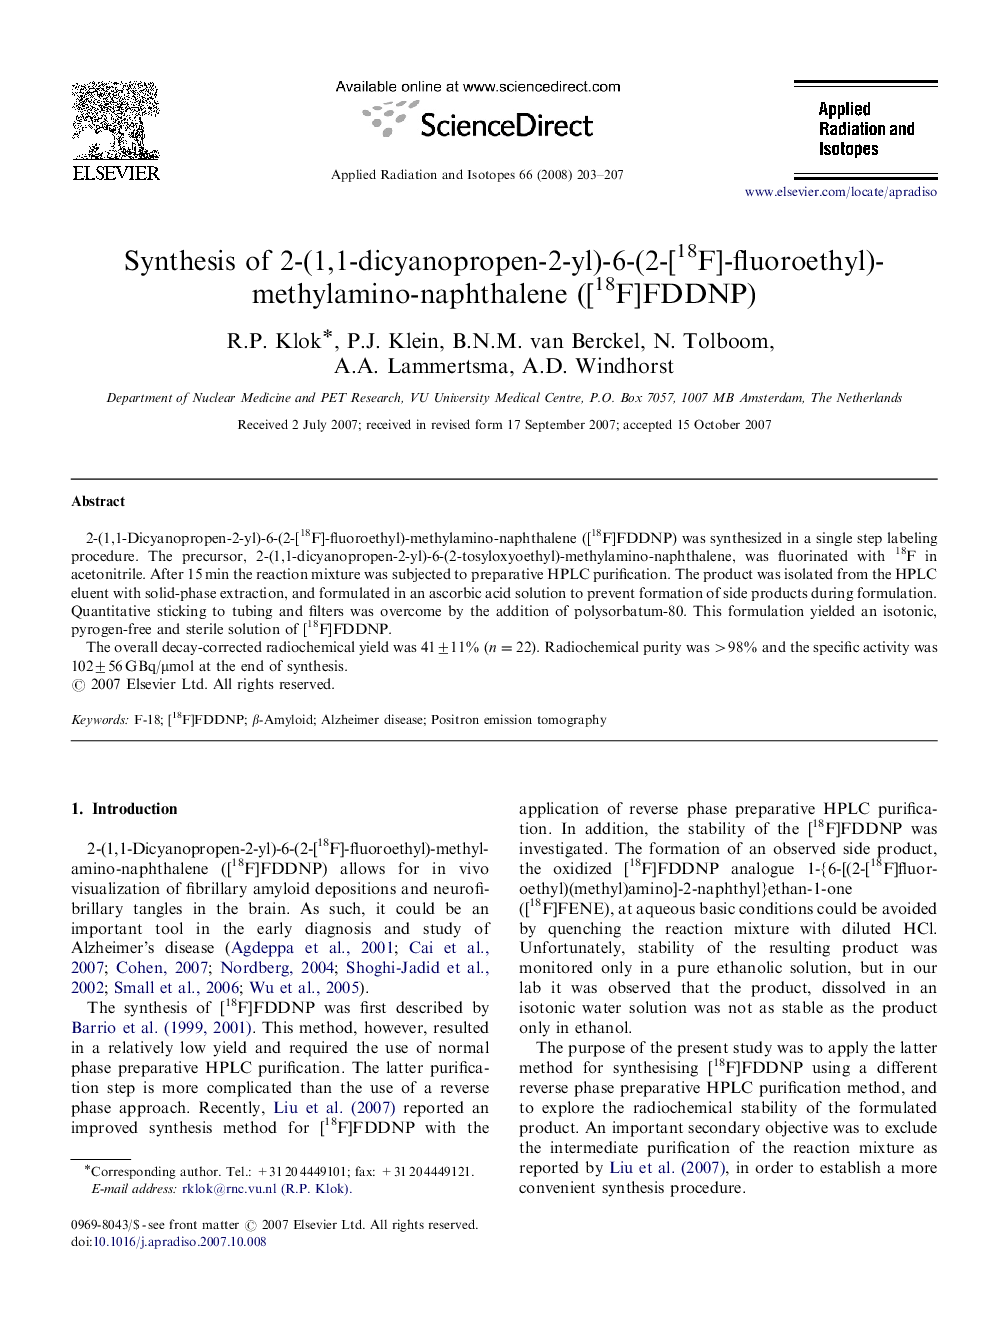 Synthesis of 2-(1,1-dicyanopropen-2-yl)-6-(2-[18F]-fluoroethyl)-methylamino-naphthalene ([18F]FDDNP)